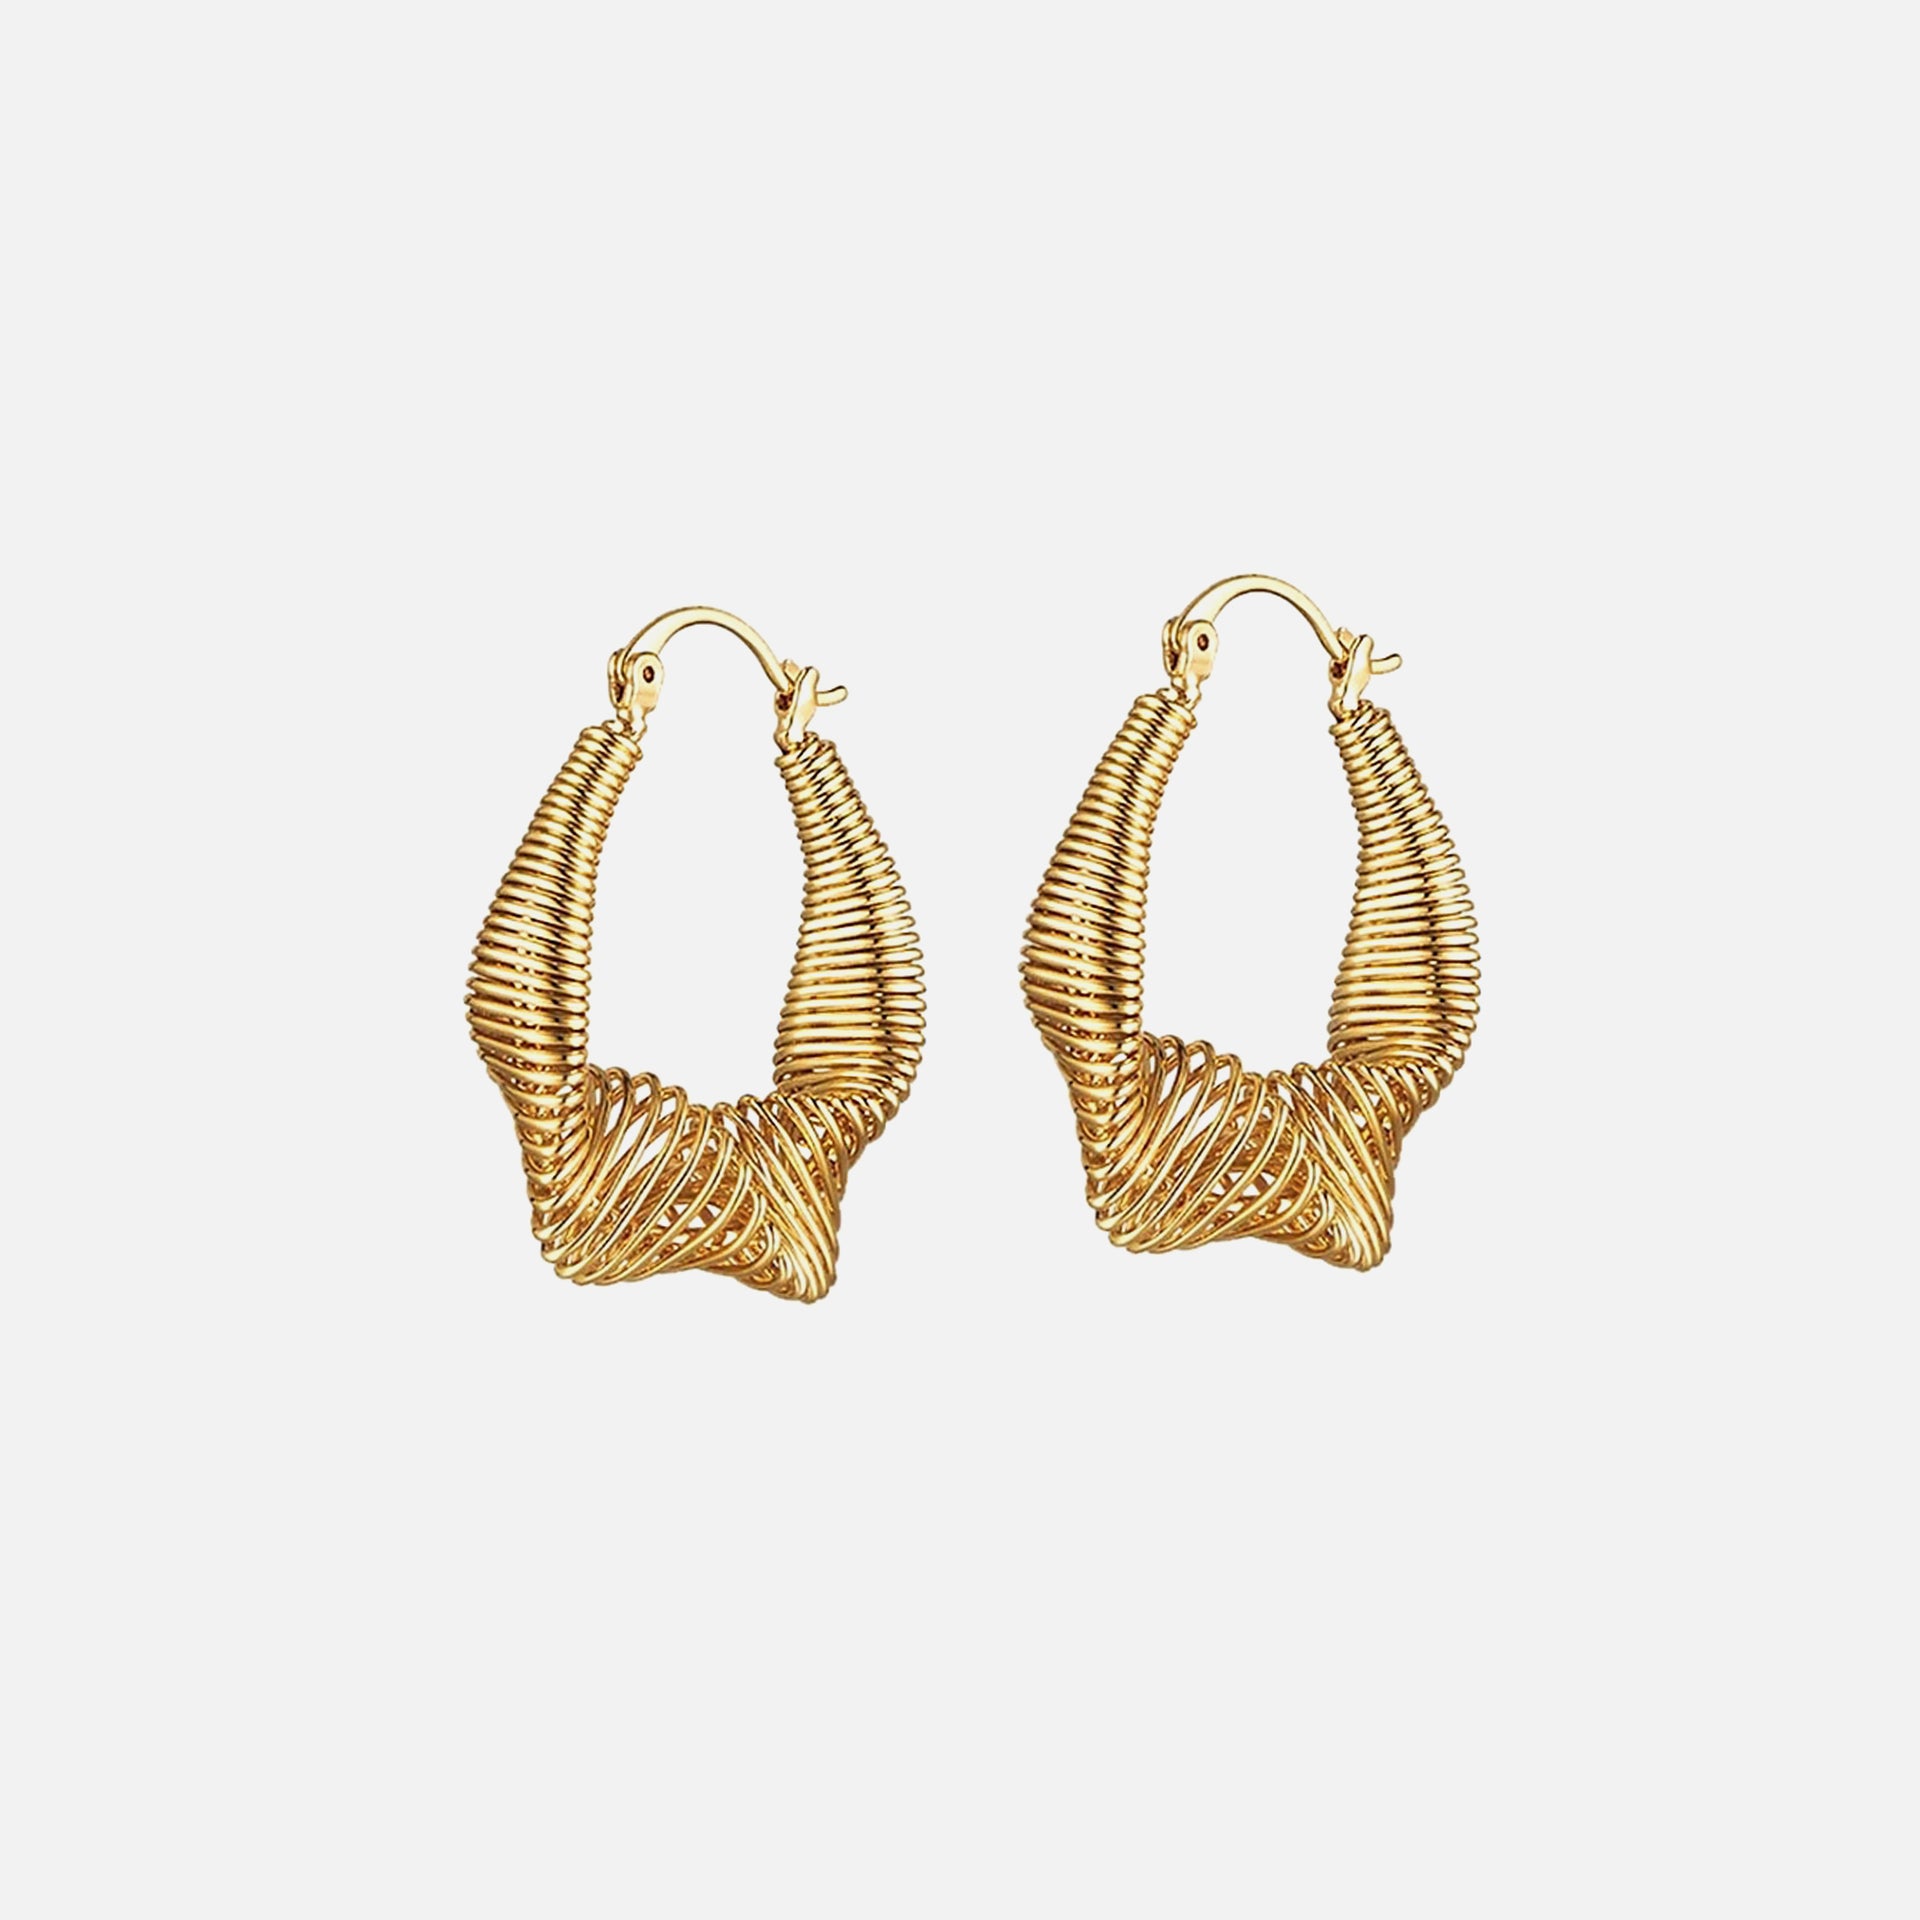 ARSN Power Trip Earrings - Gold